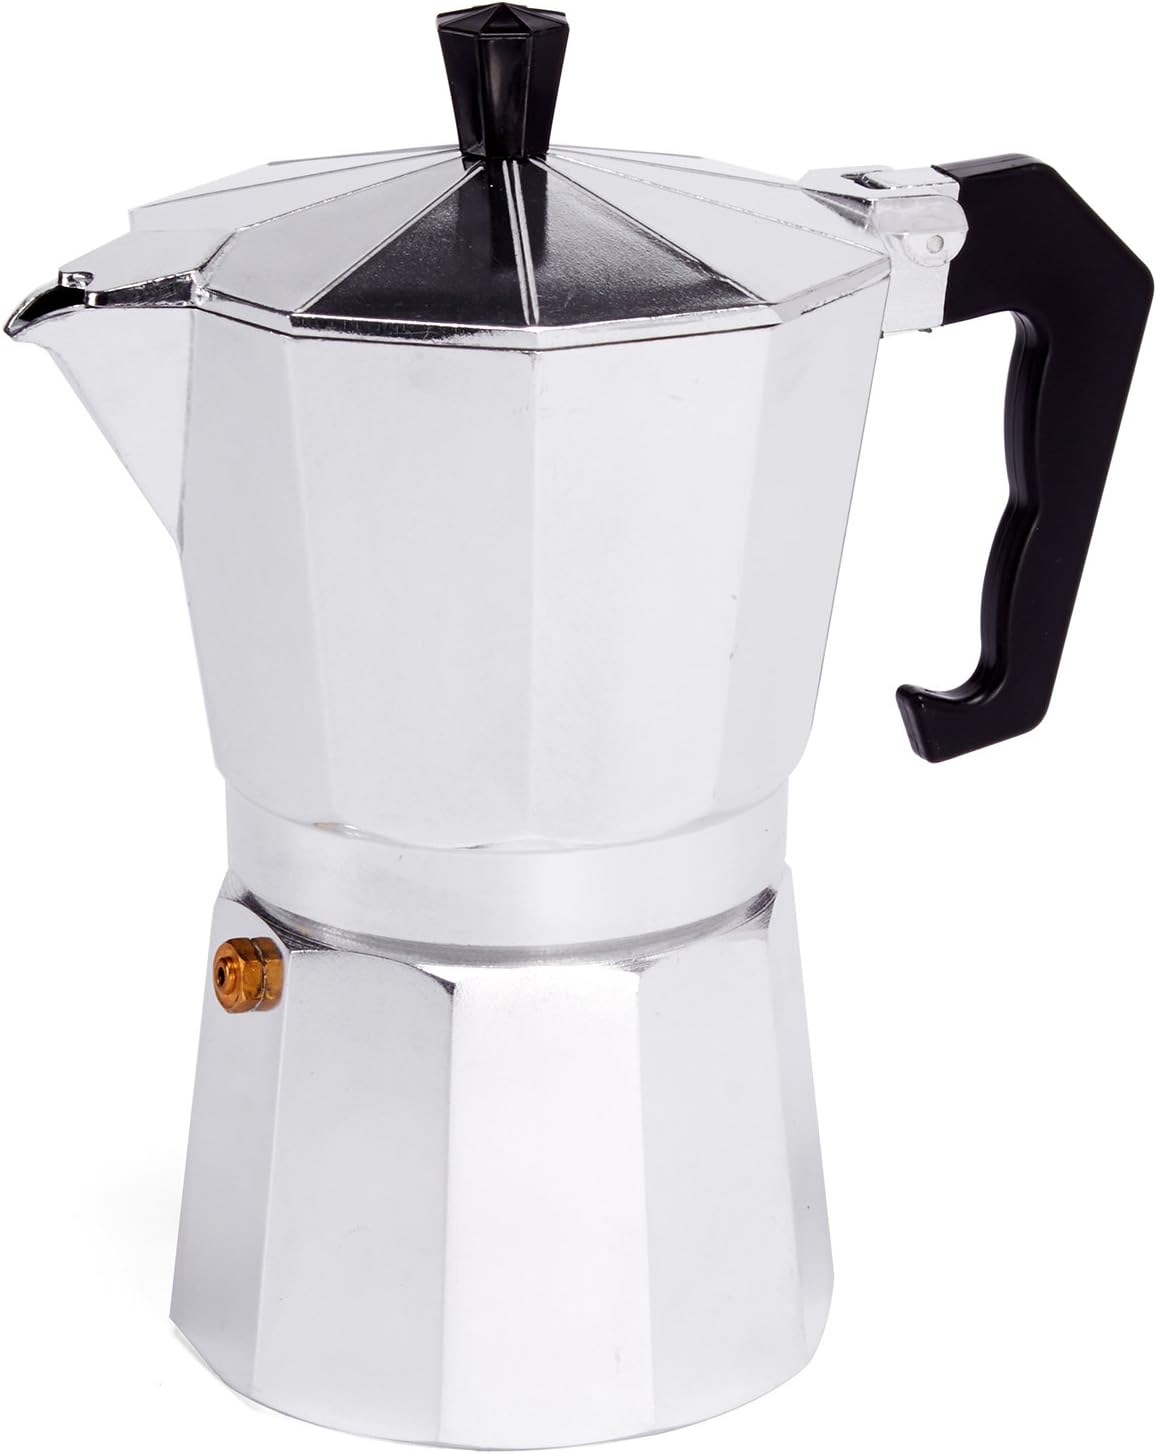 MSV espresso maker espresso mokka maker coffee maker aluminum - 6 cups